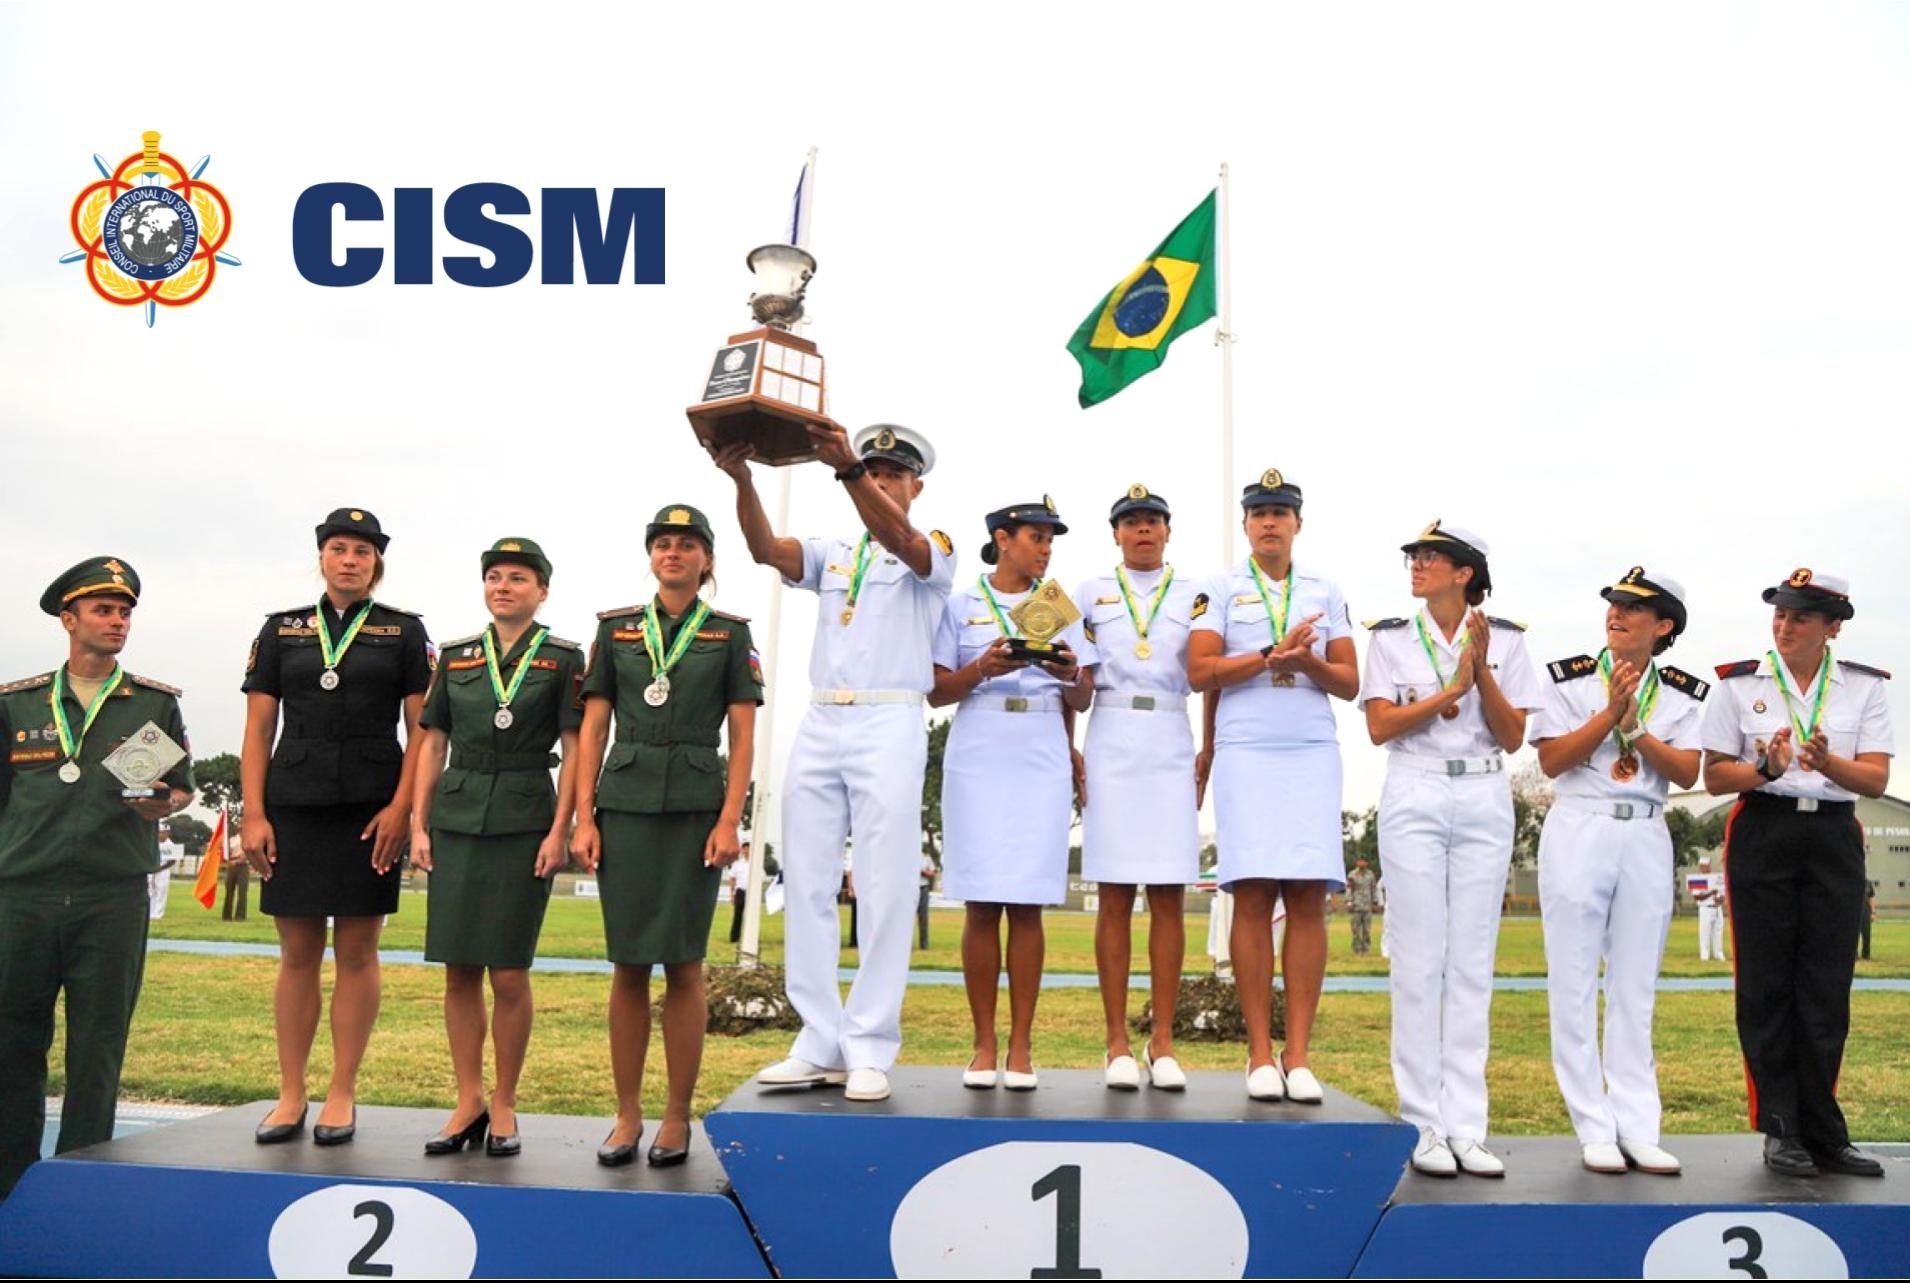 HLS.Today Brazil Champion of Military World Naval Pentathlon